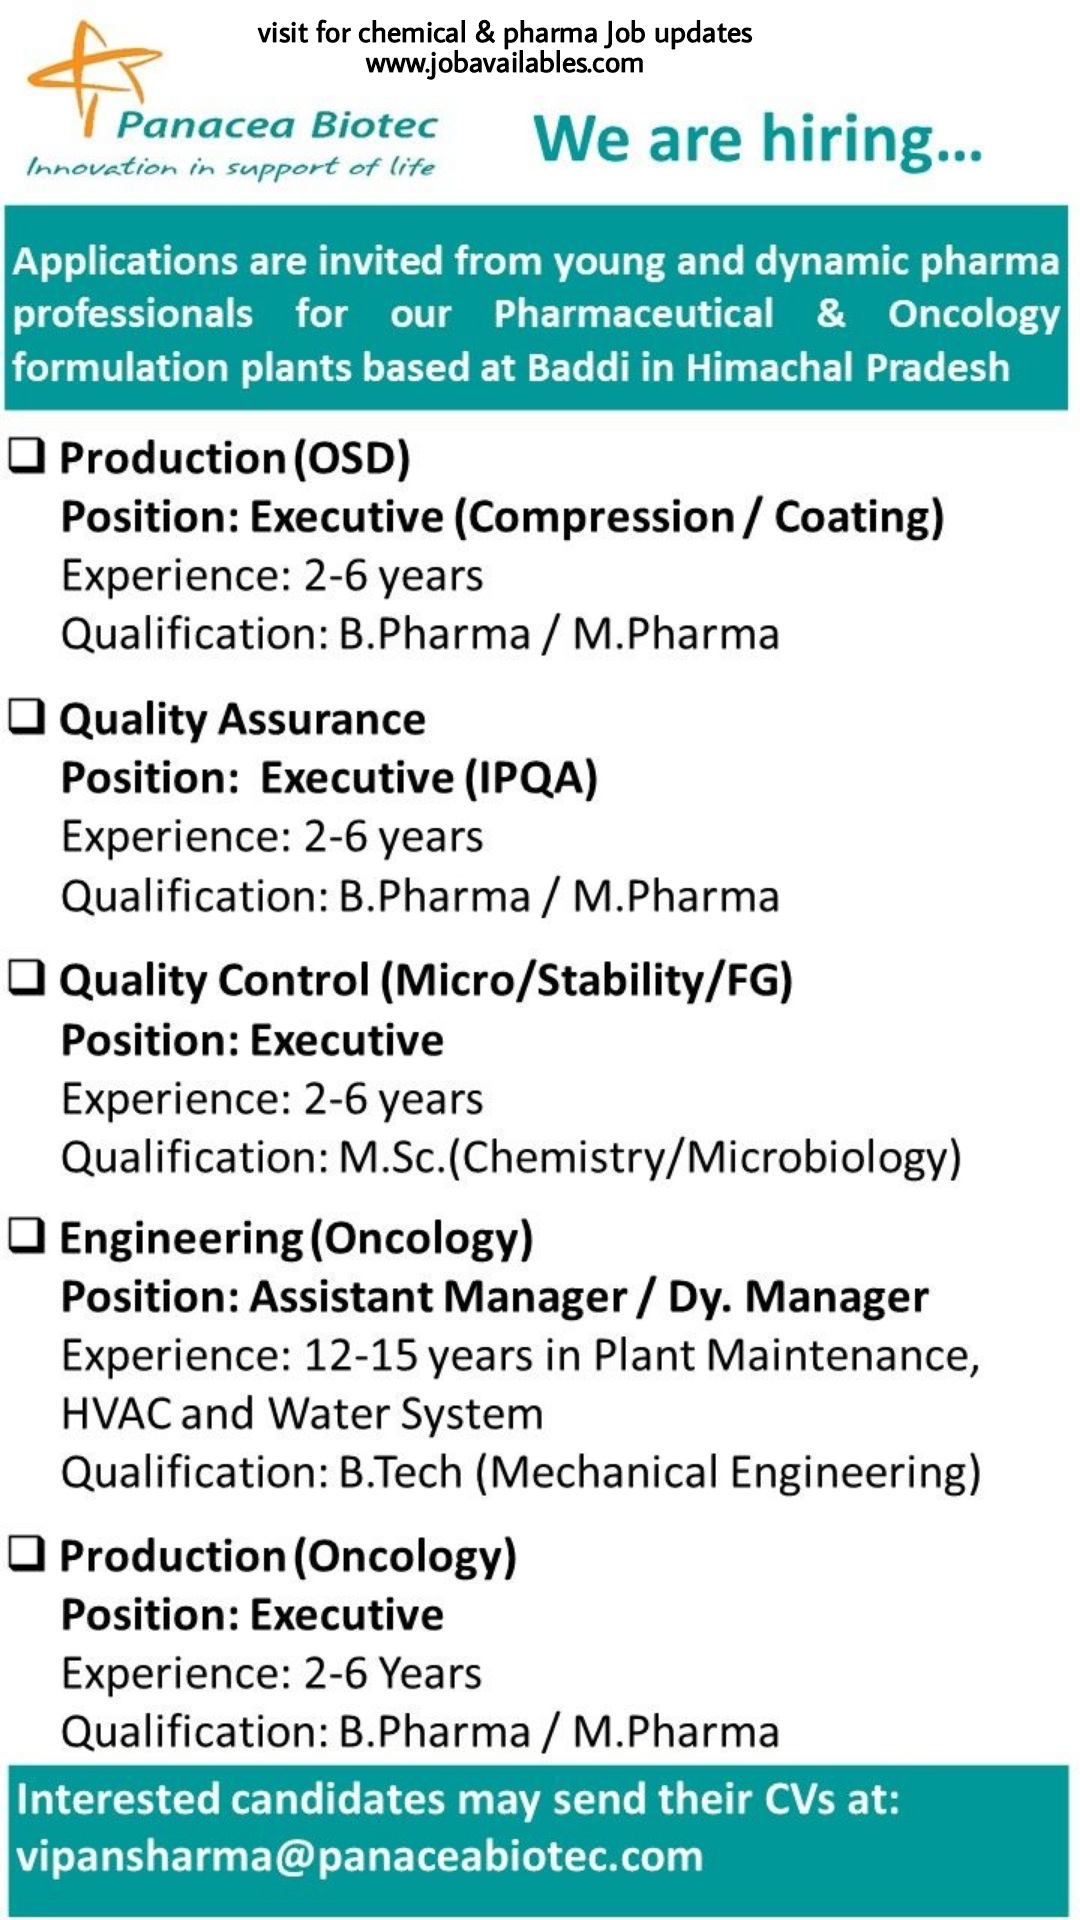 Job Availables, Panacea Biotec Job Opening For QA/ QC/ Production/ Engineering Dept